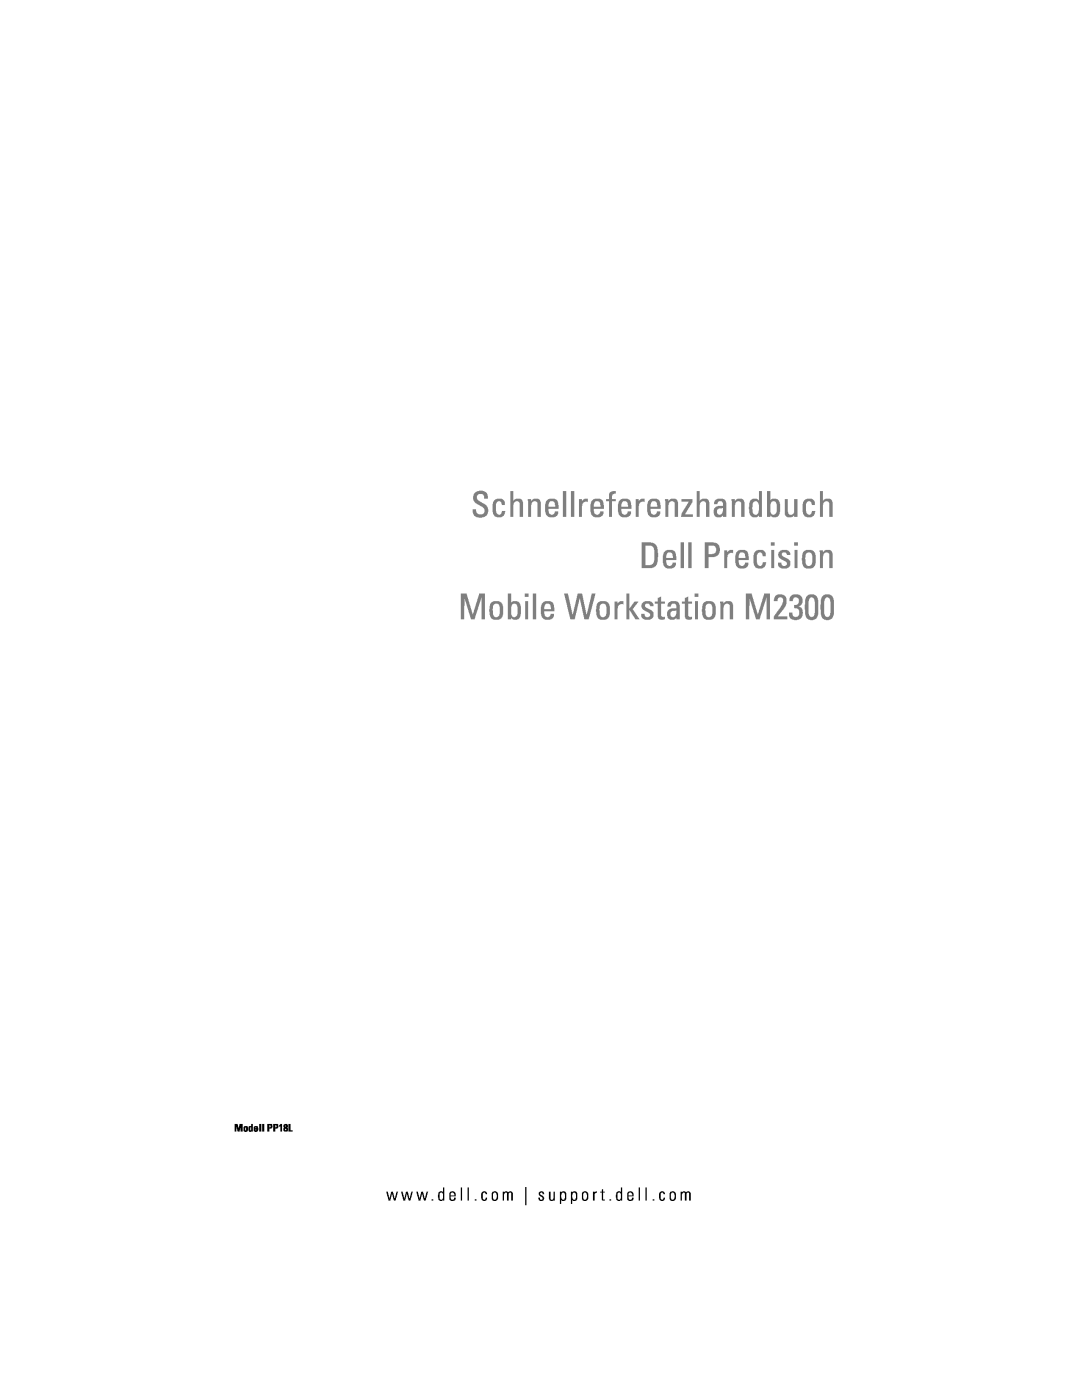 Dell manual Schnellreferenzhandbuch Dell Precision Mobile Workstation M2300, Modell PP18L 